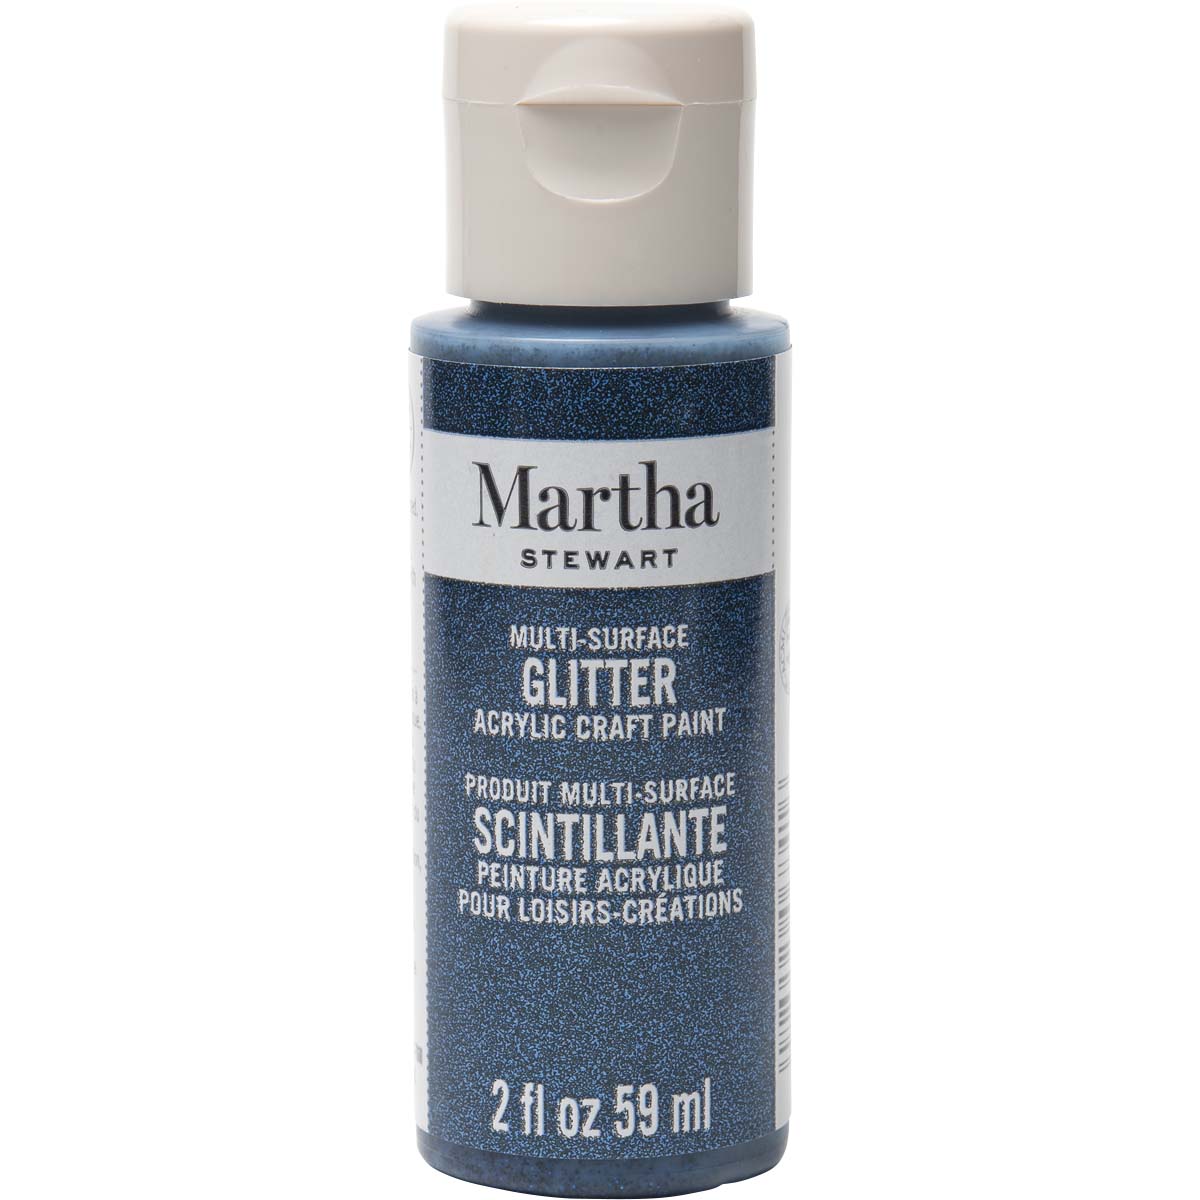 Martha Stewart ® Multi-Surface Glitter Acrylic Craft Paint - Night Sky, 2 oz. - 32184CA